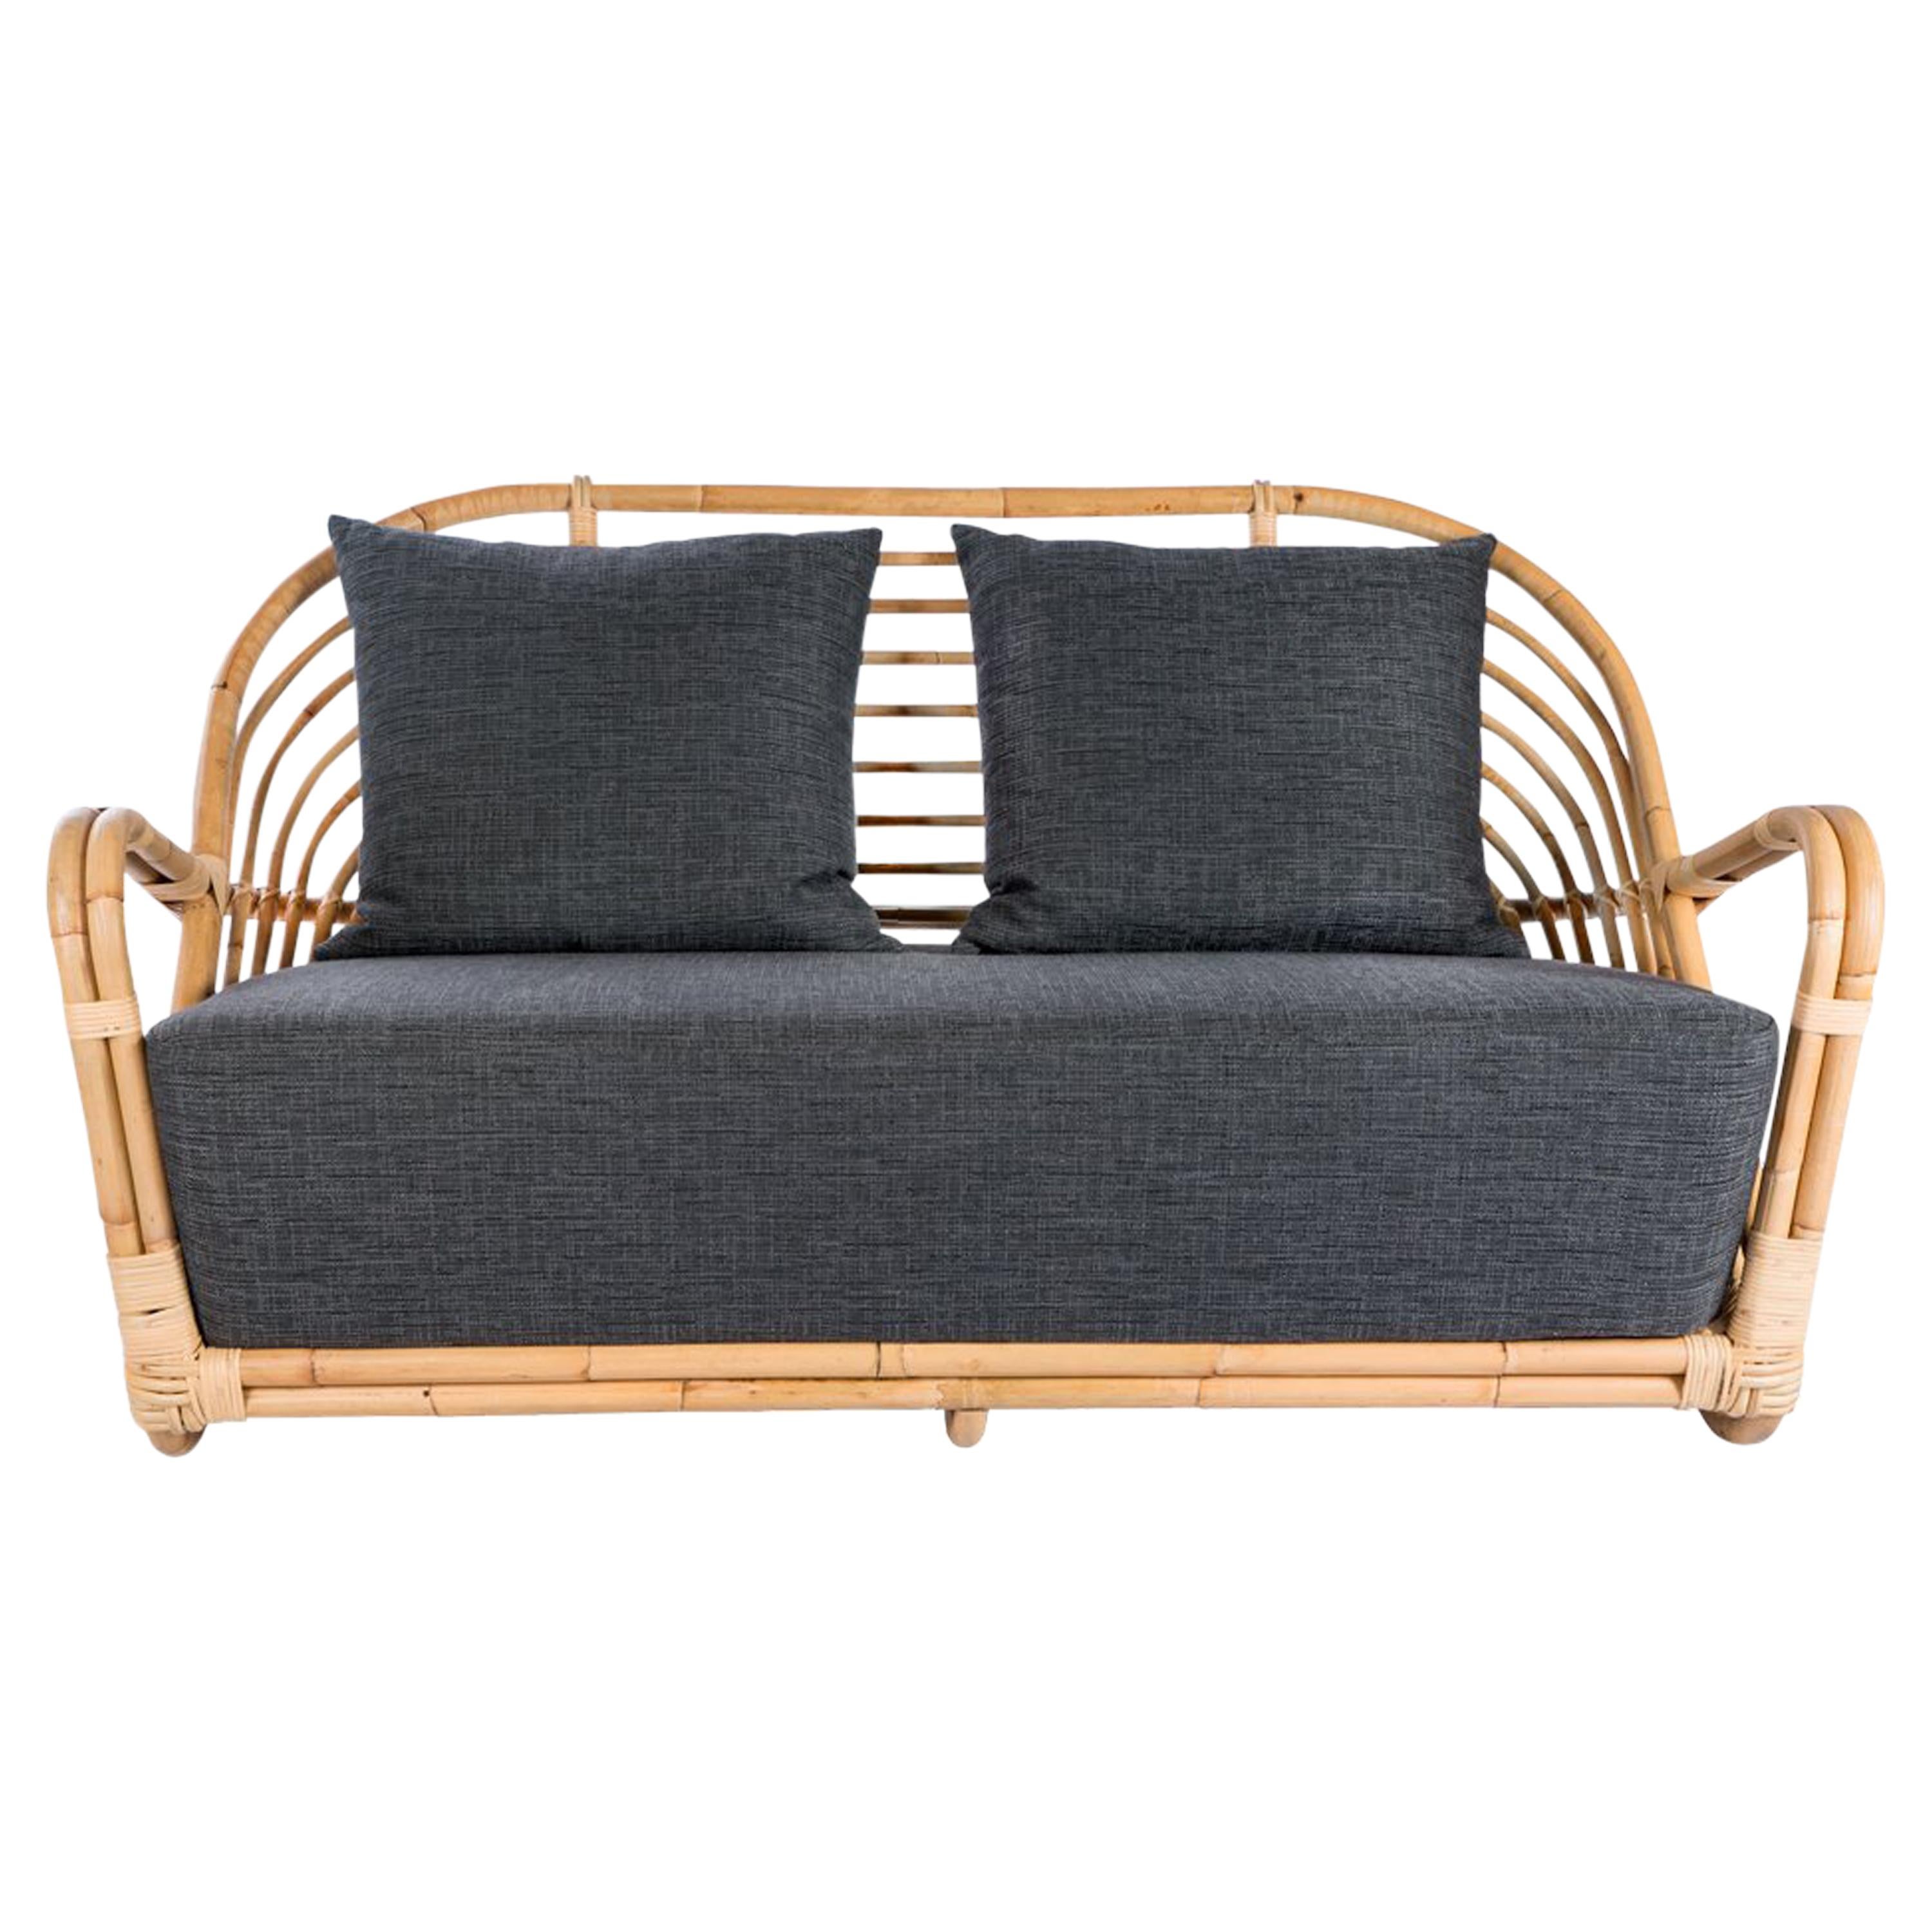 1930s Arne Jacobsen Design Rattan Sofa